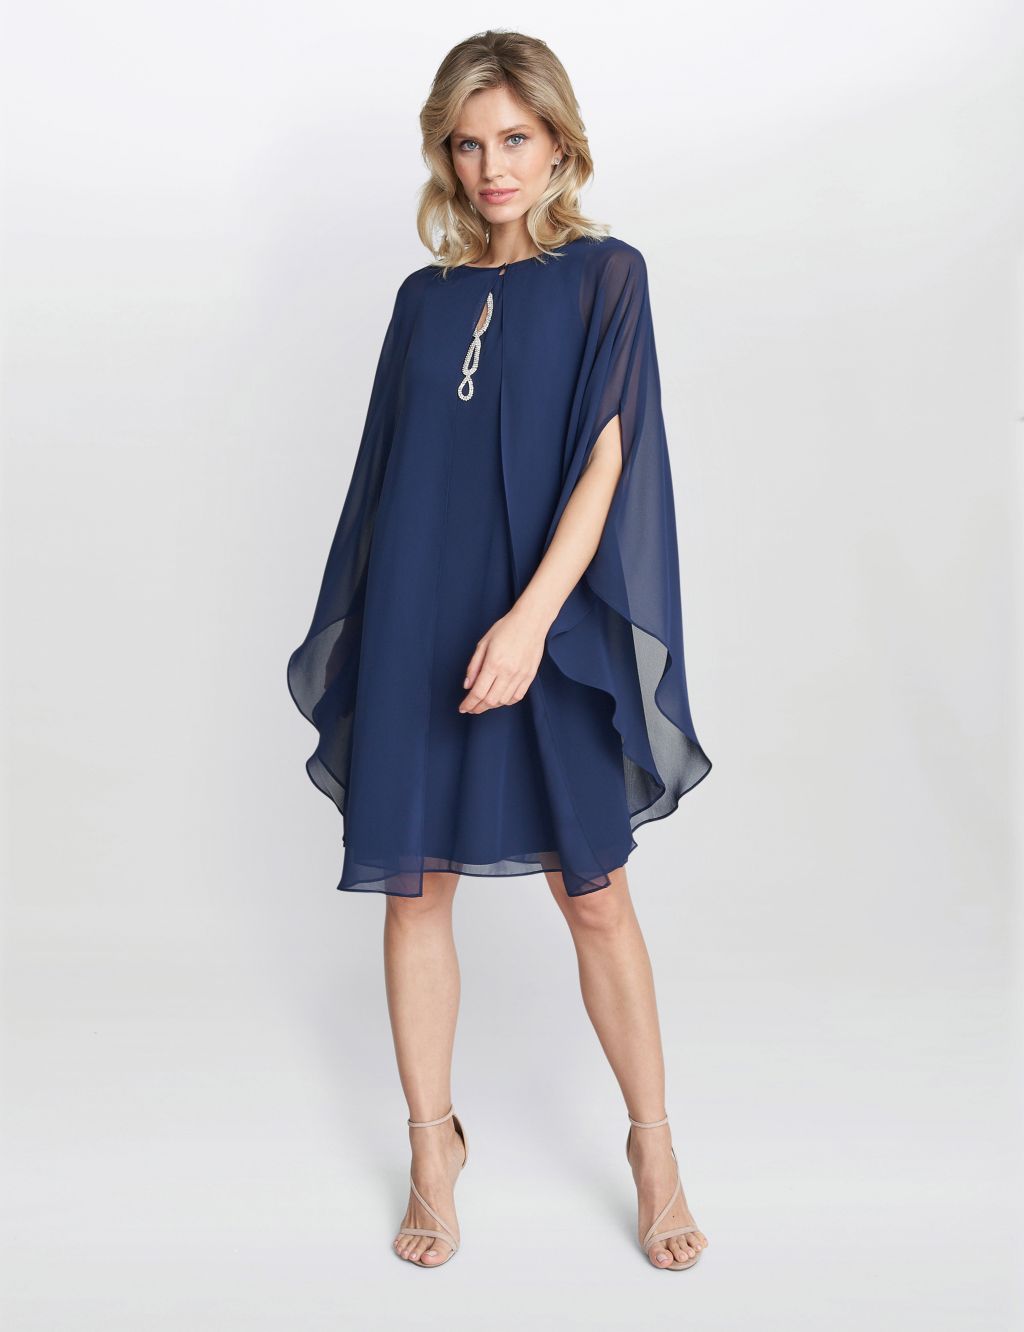 Chiffon Embellished Shift Dress with Cape image 3